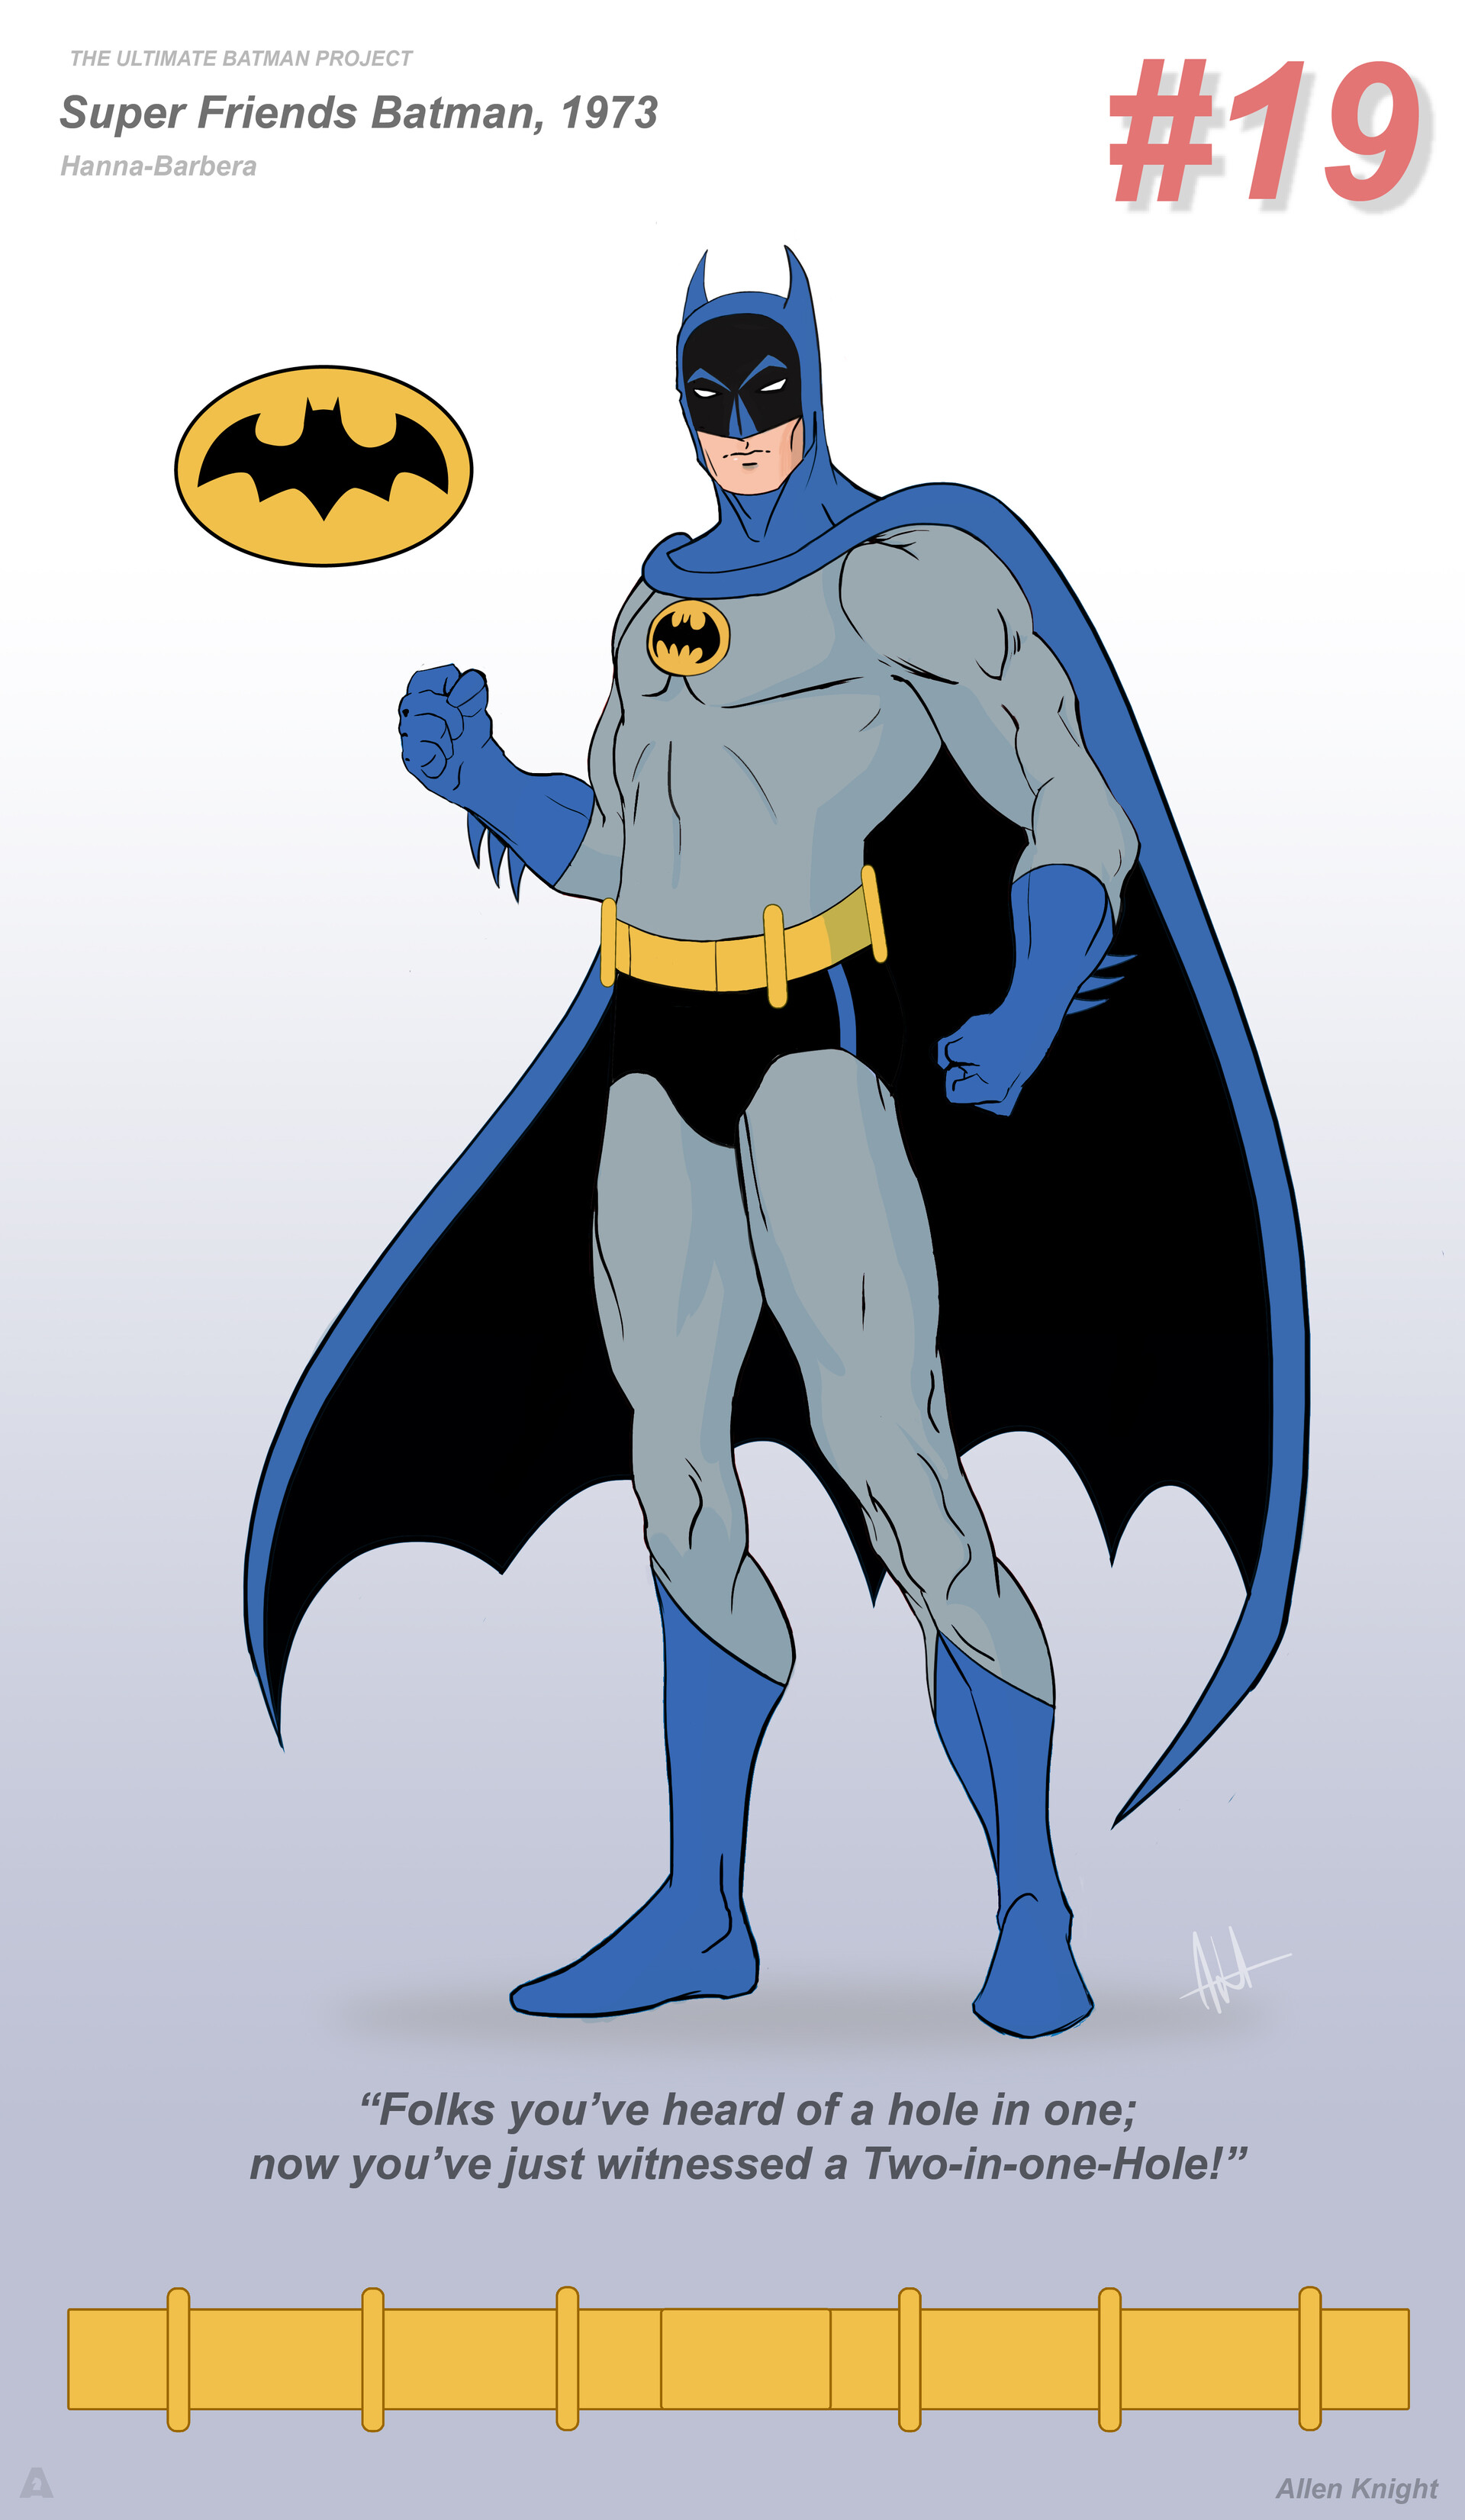 ArtStation - The Ultimate Batman Project: Costume #19 - Super Friends Batman